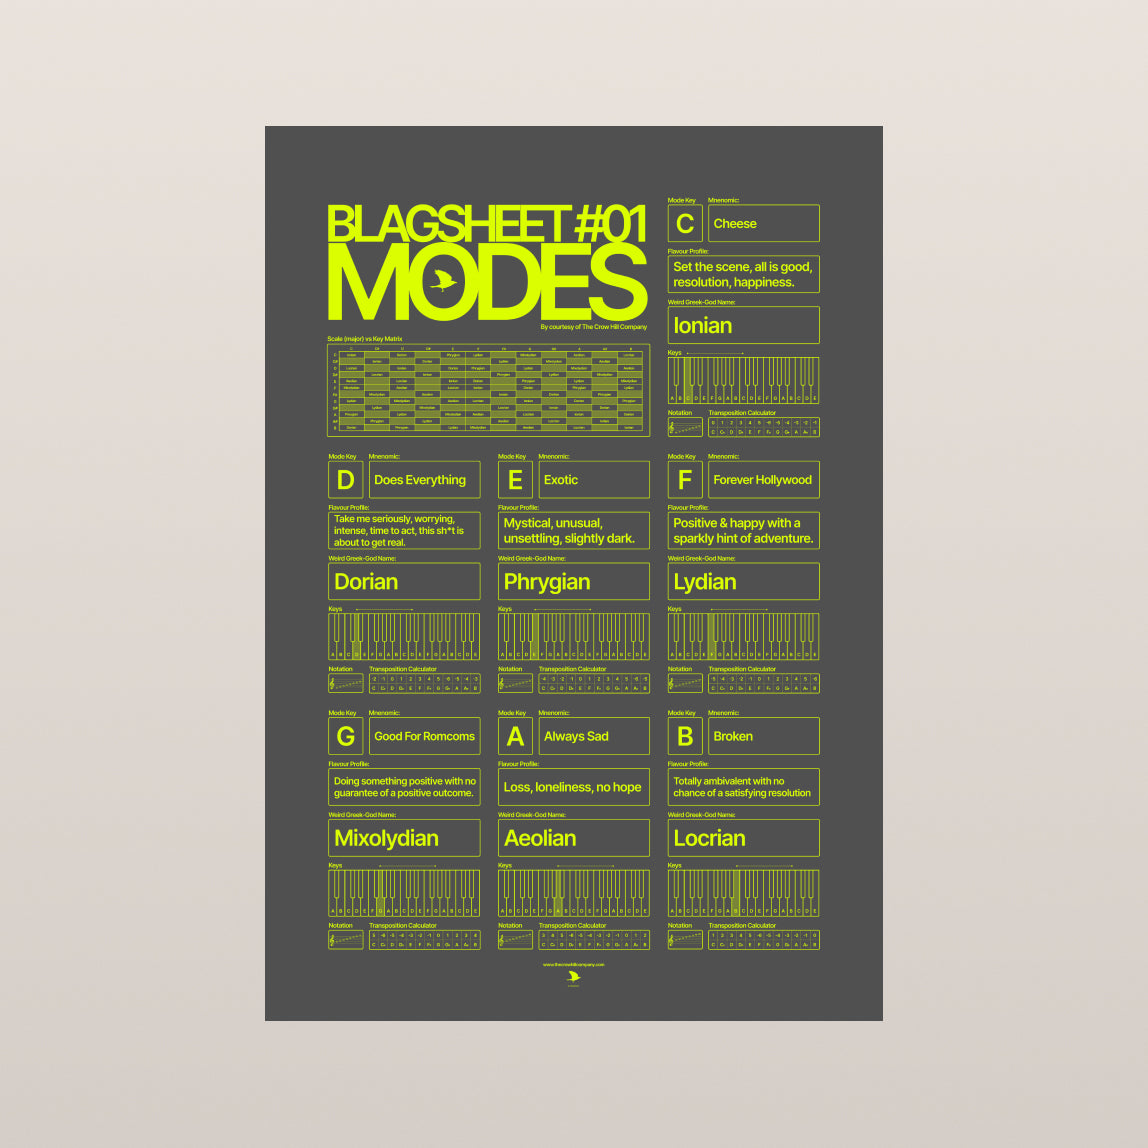 01 Modes Blagsheet Poster (Neon)